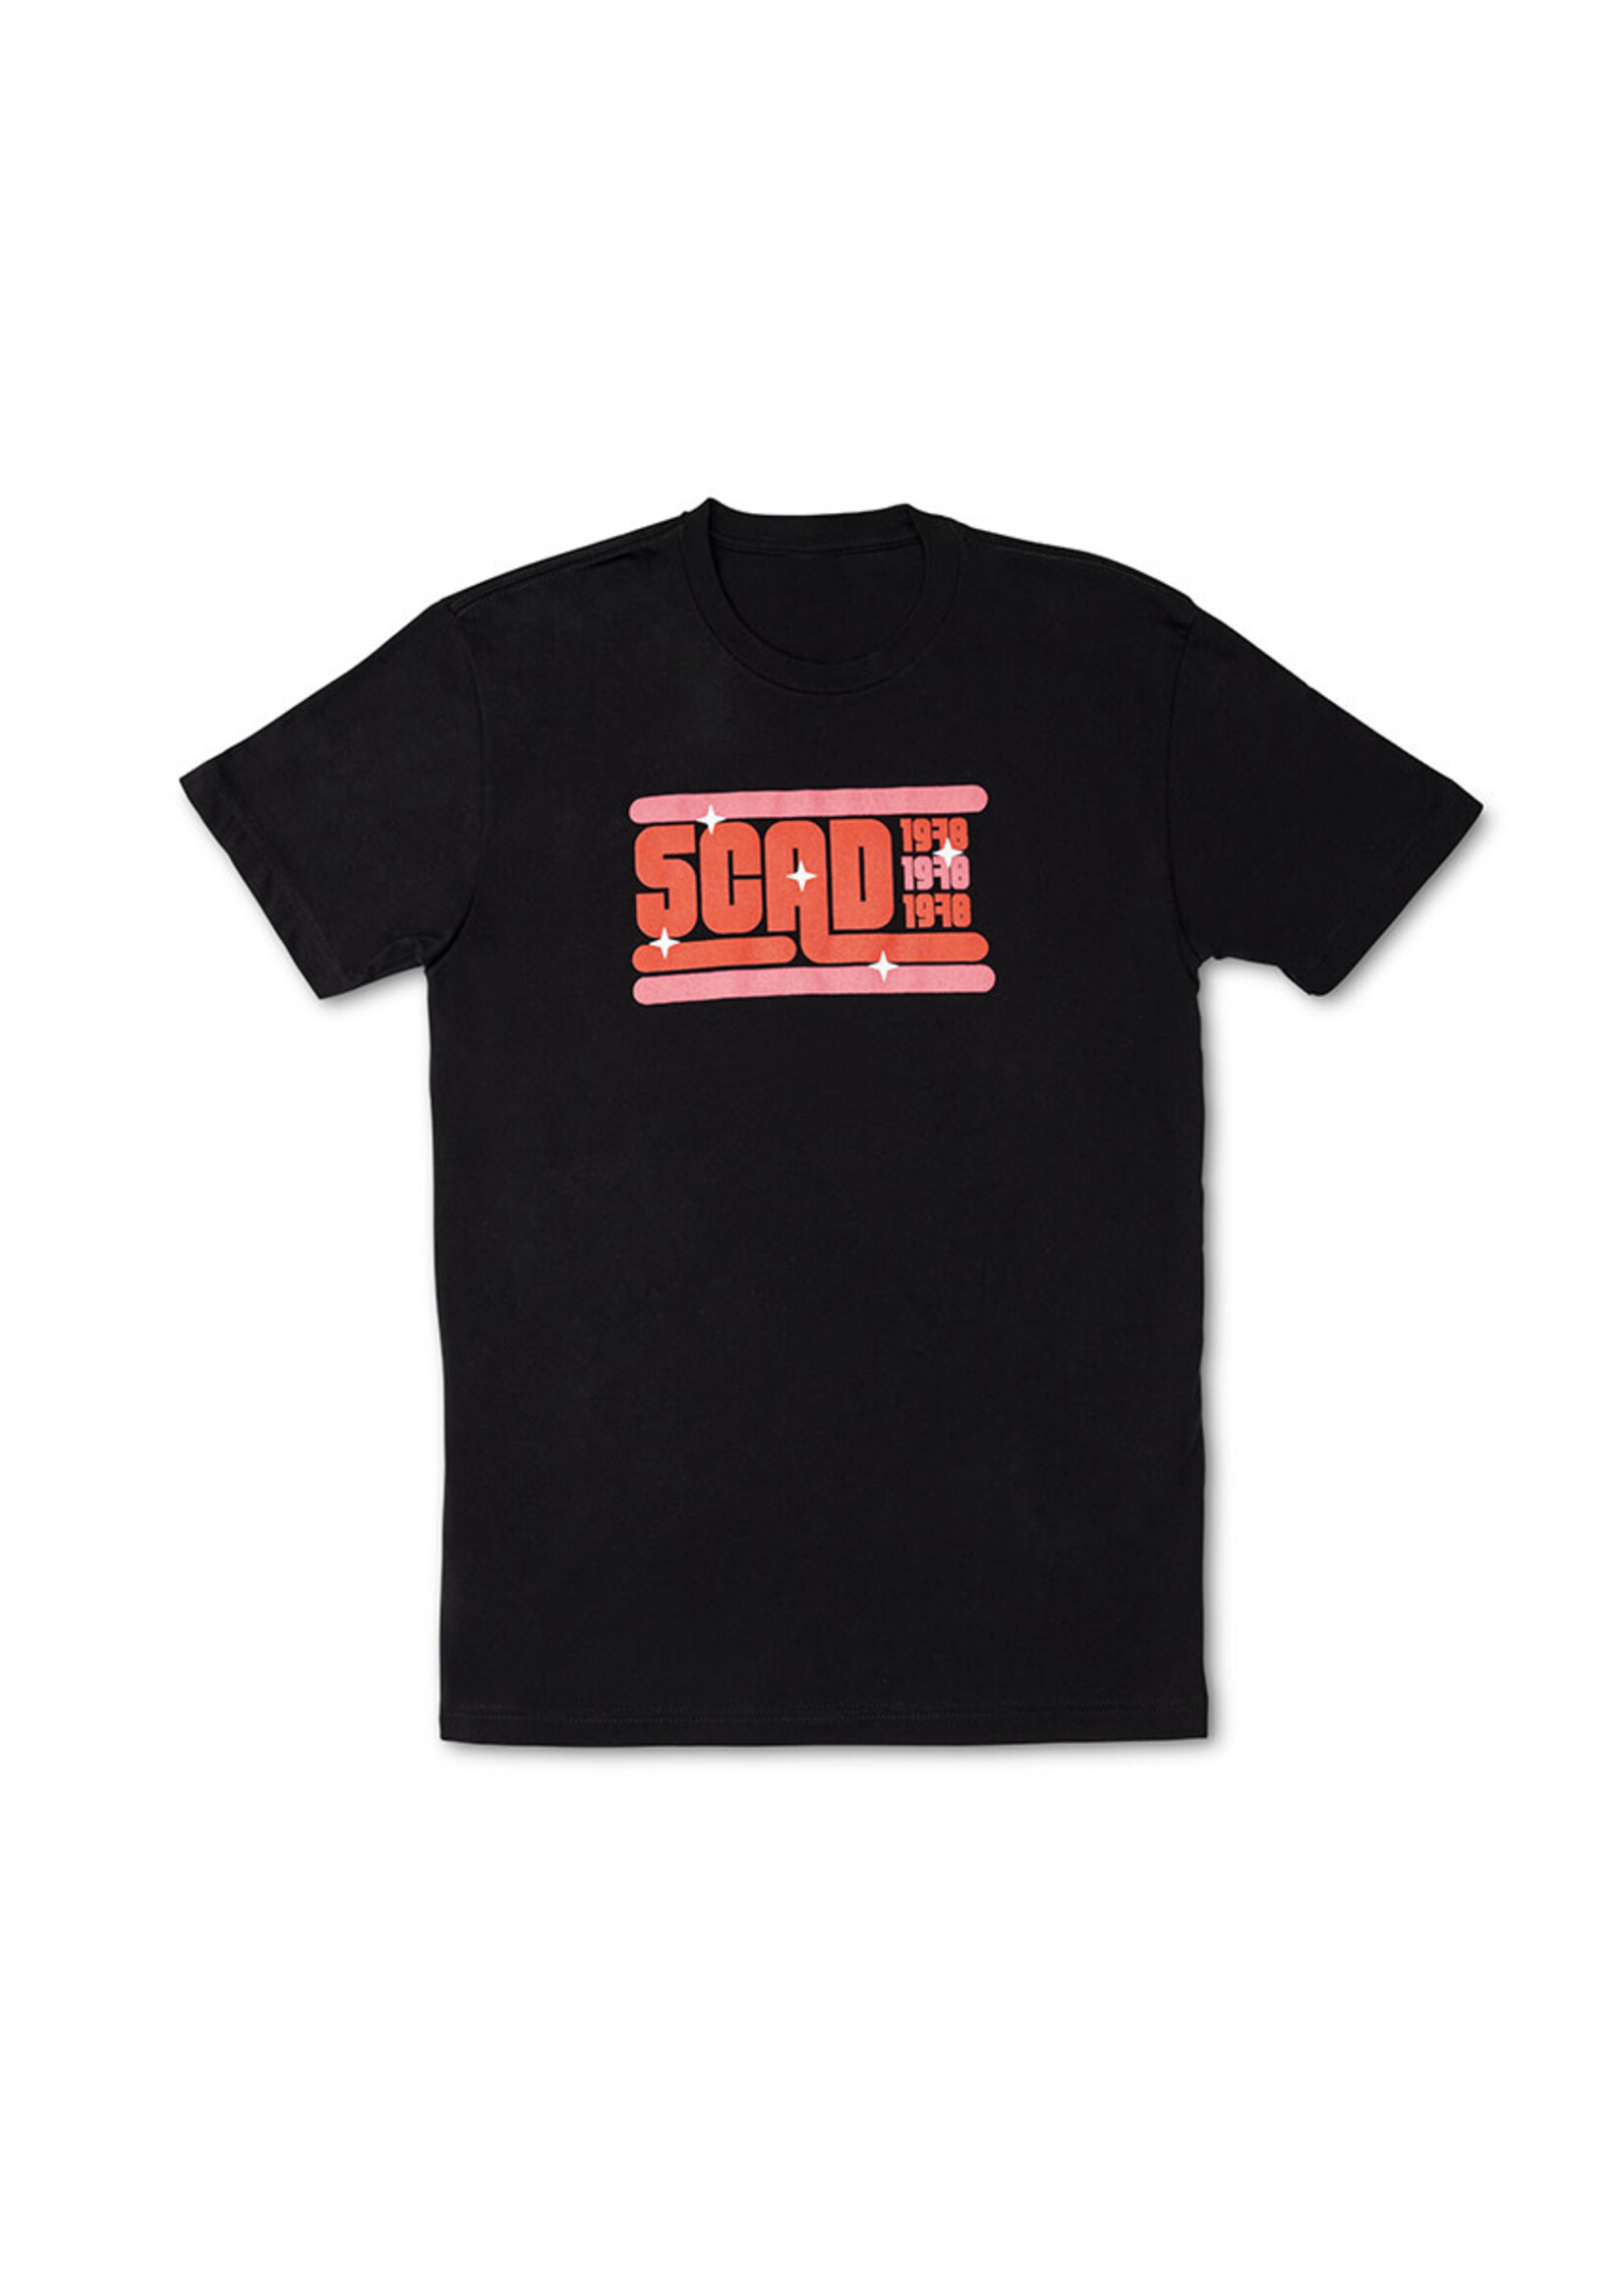 SCAD SCAD Groovy, T-Shirt, Black